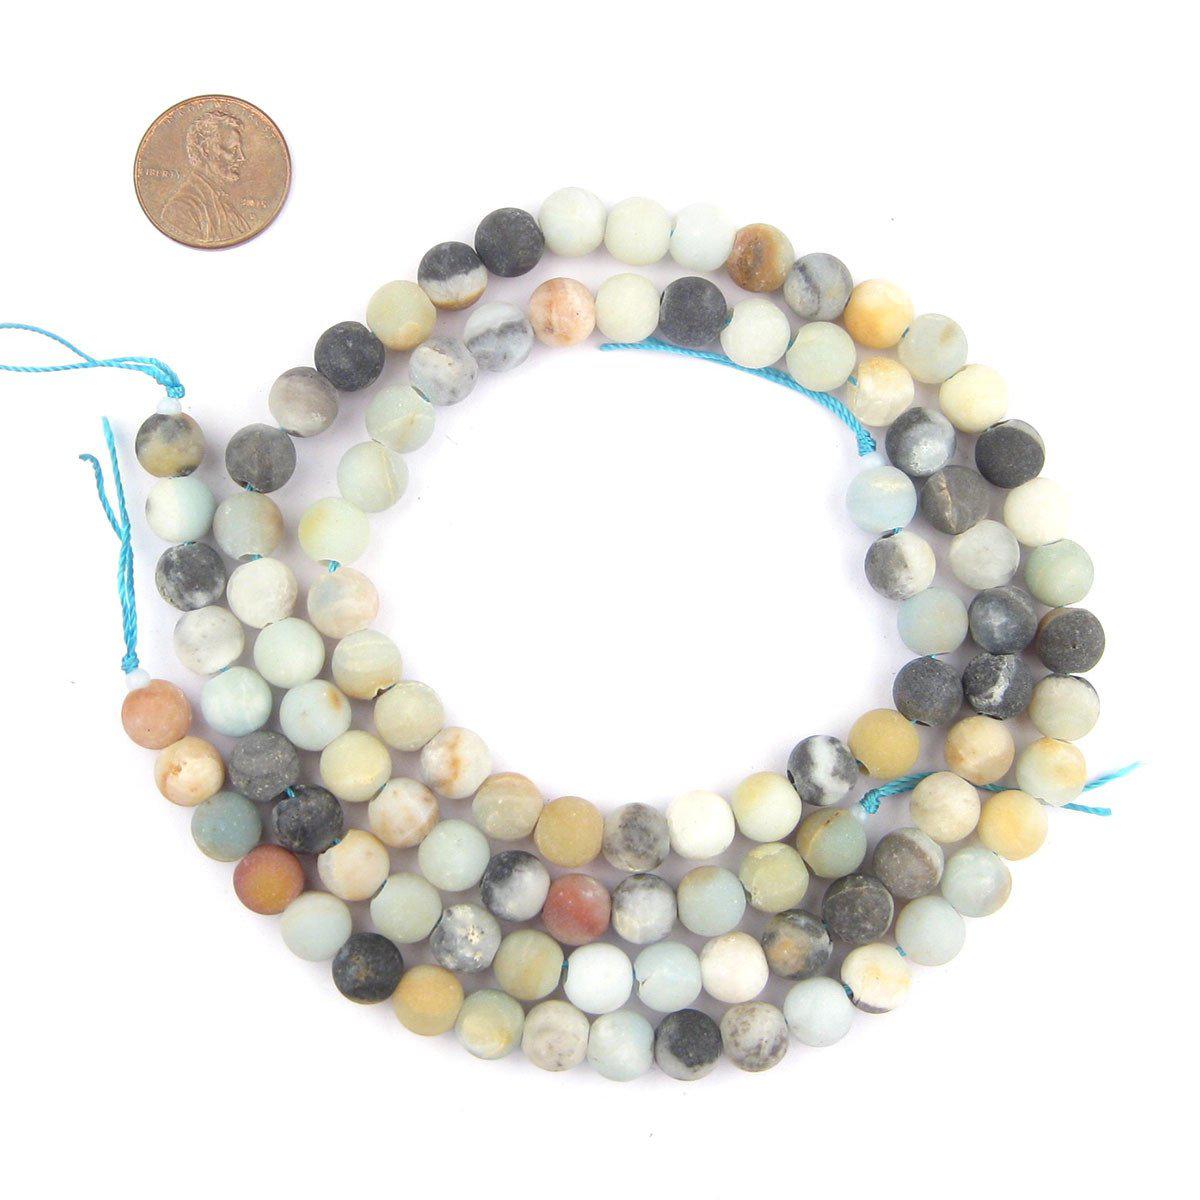 TheBeadChest Spherical Amazonite Stone Beads 8mm Large Hole Multicolor Round Gemstone 15 Inch Strand